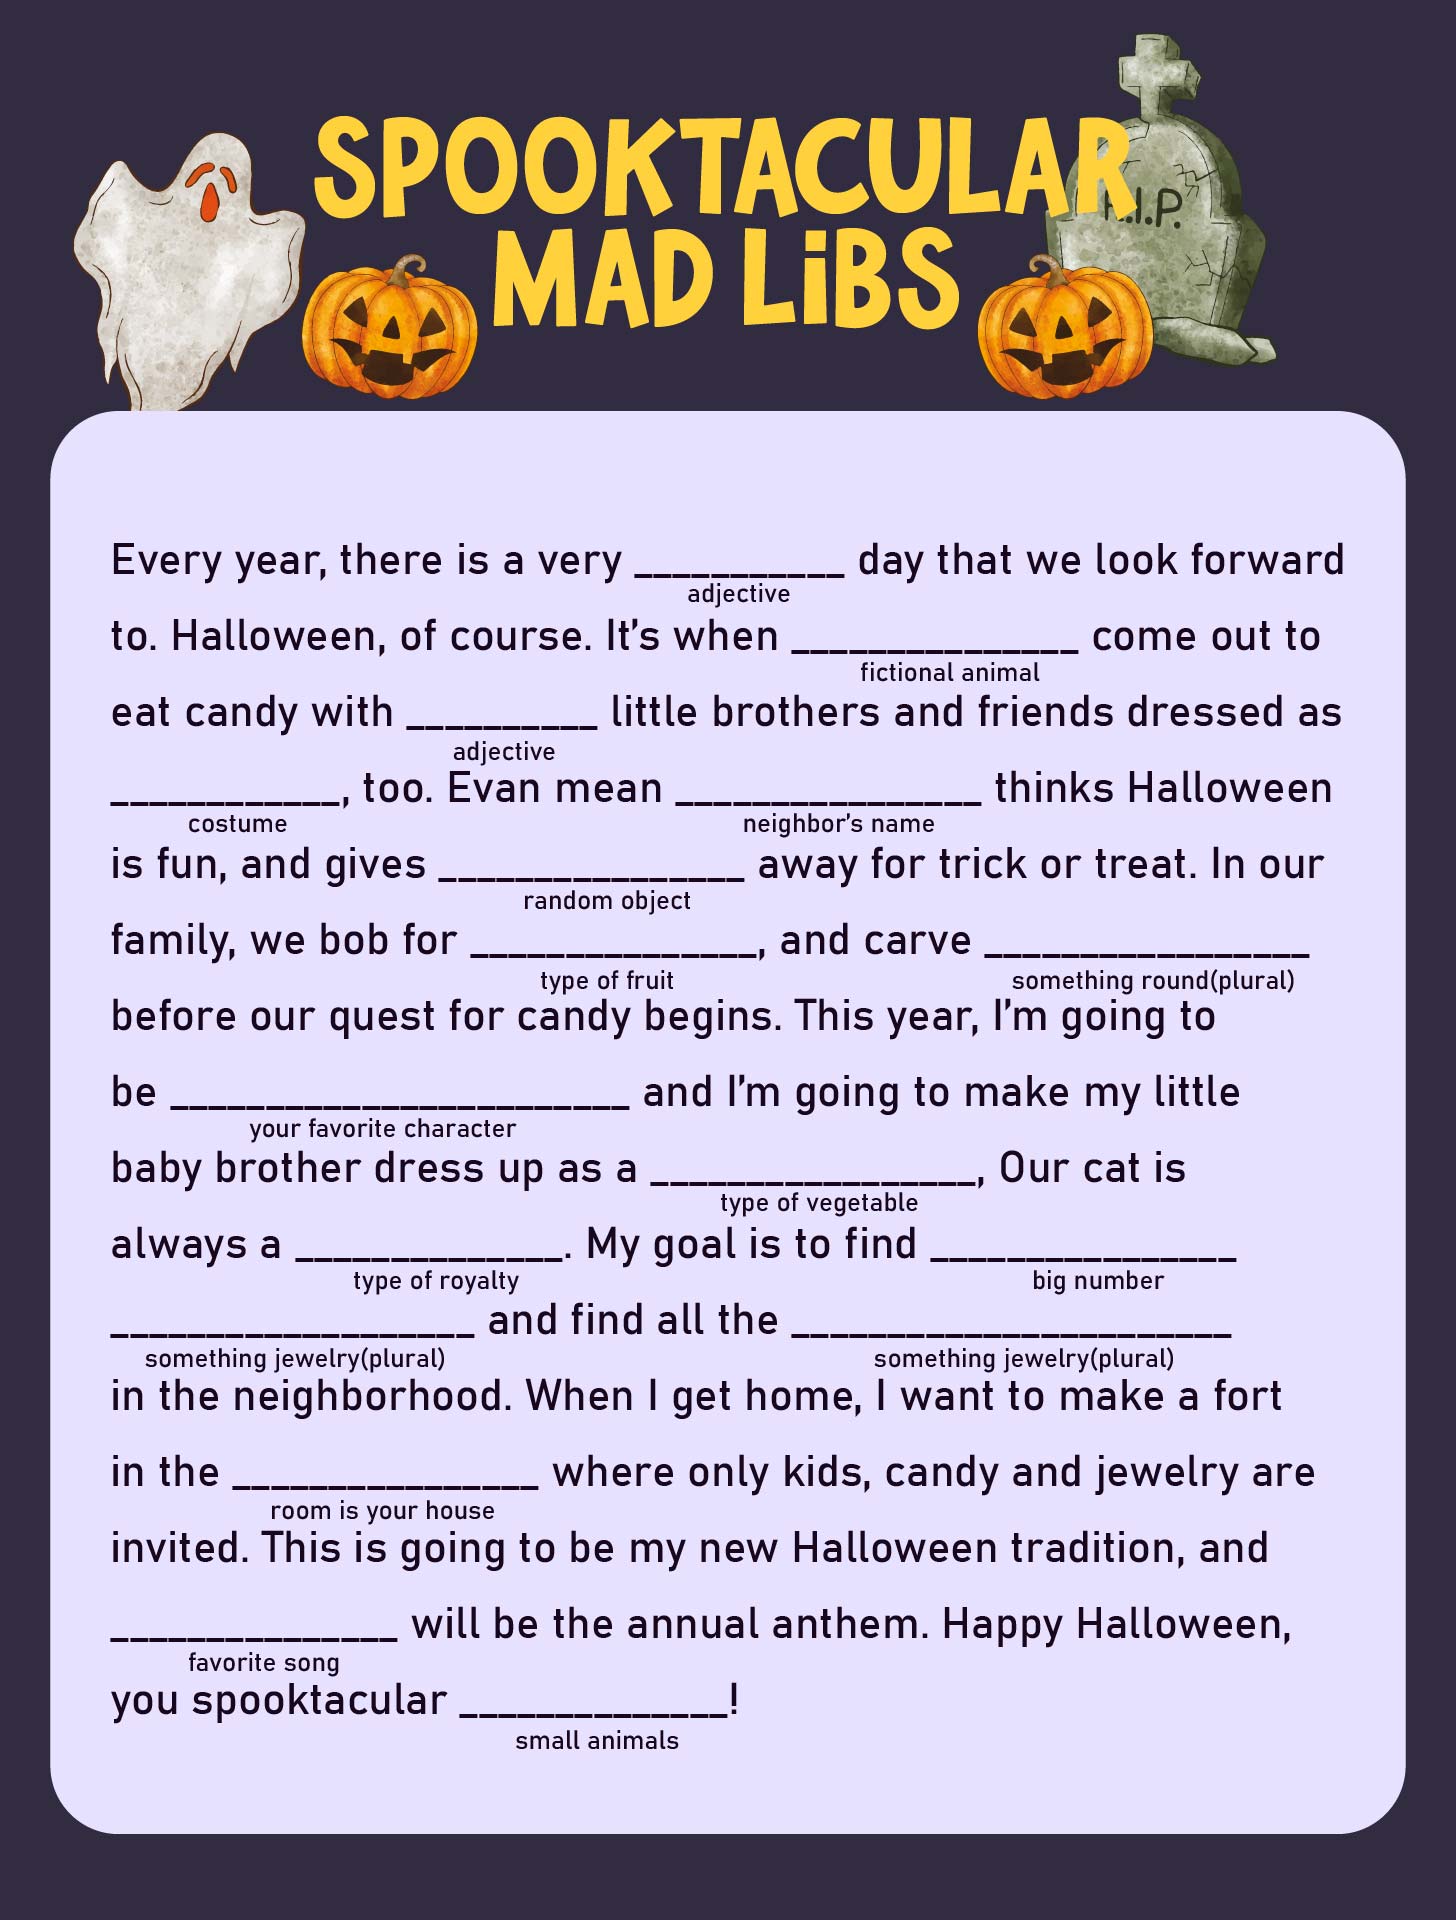 15-best-free-halloween-mad-lib-printables-pdf-for-free-at-printablee